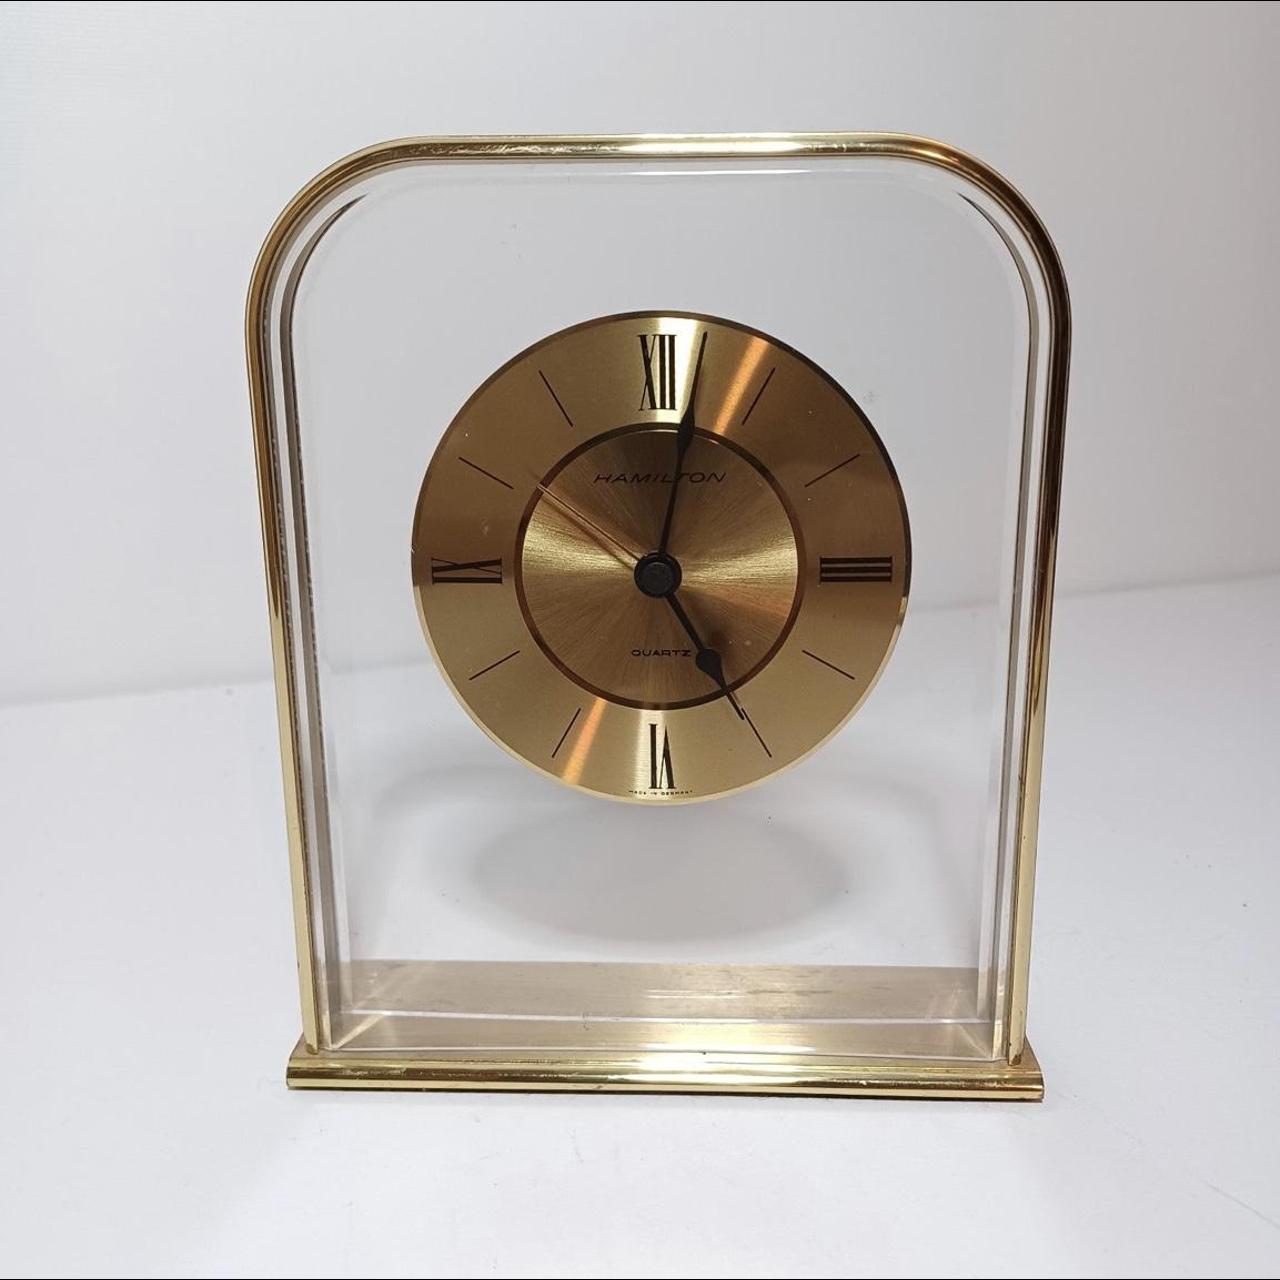 Hamilton Watch Company Gold Decor-home-accesories